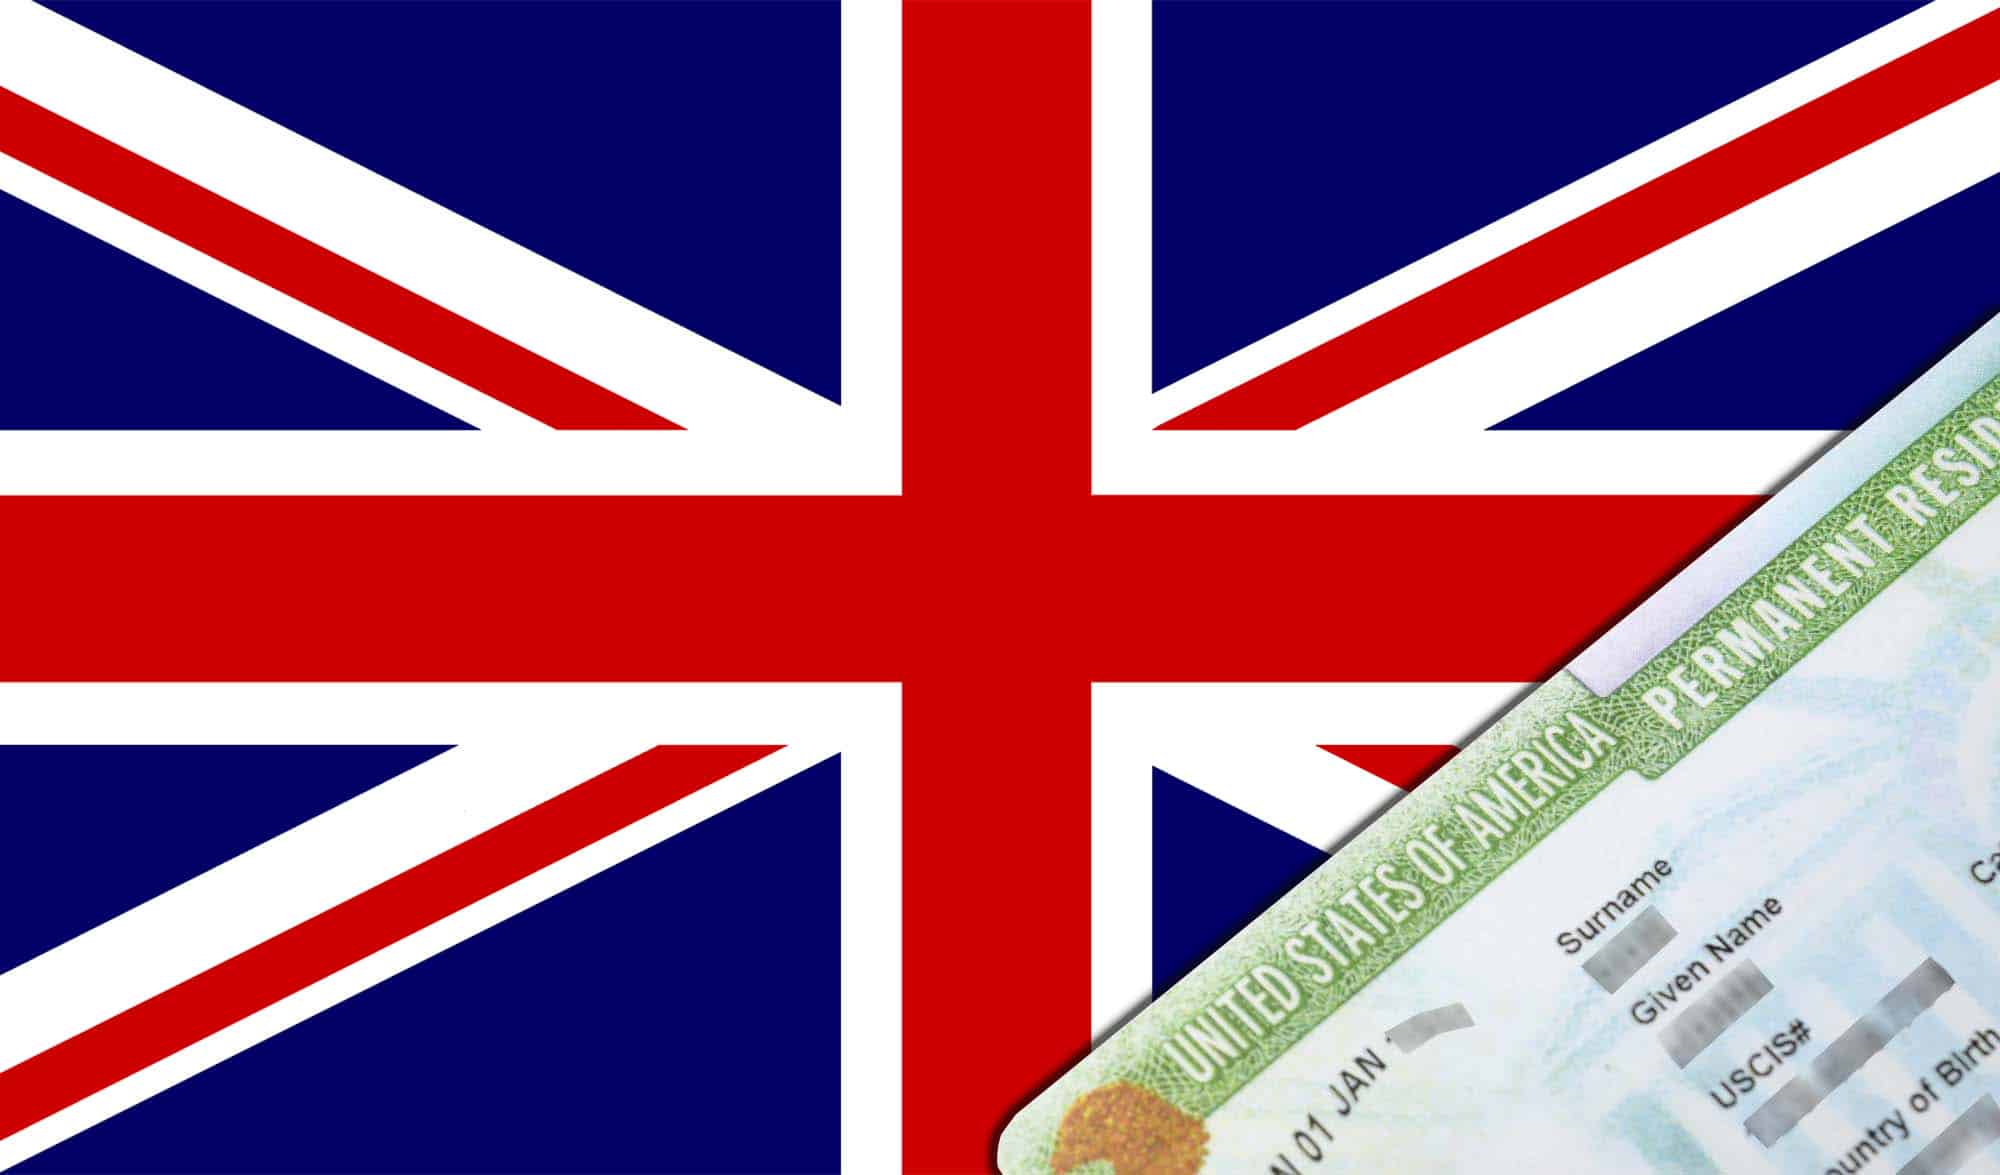 uk visit visa from usa for green card holder